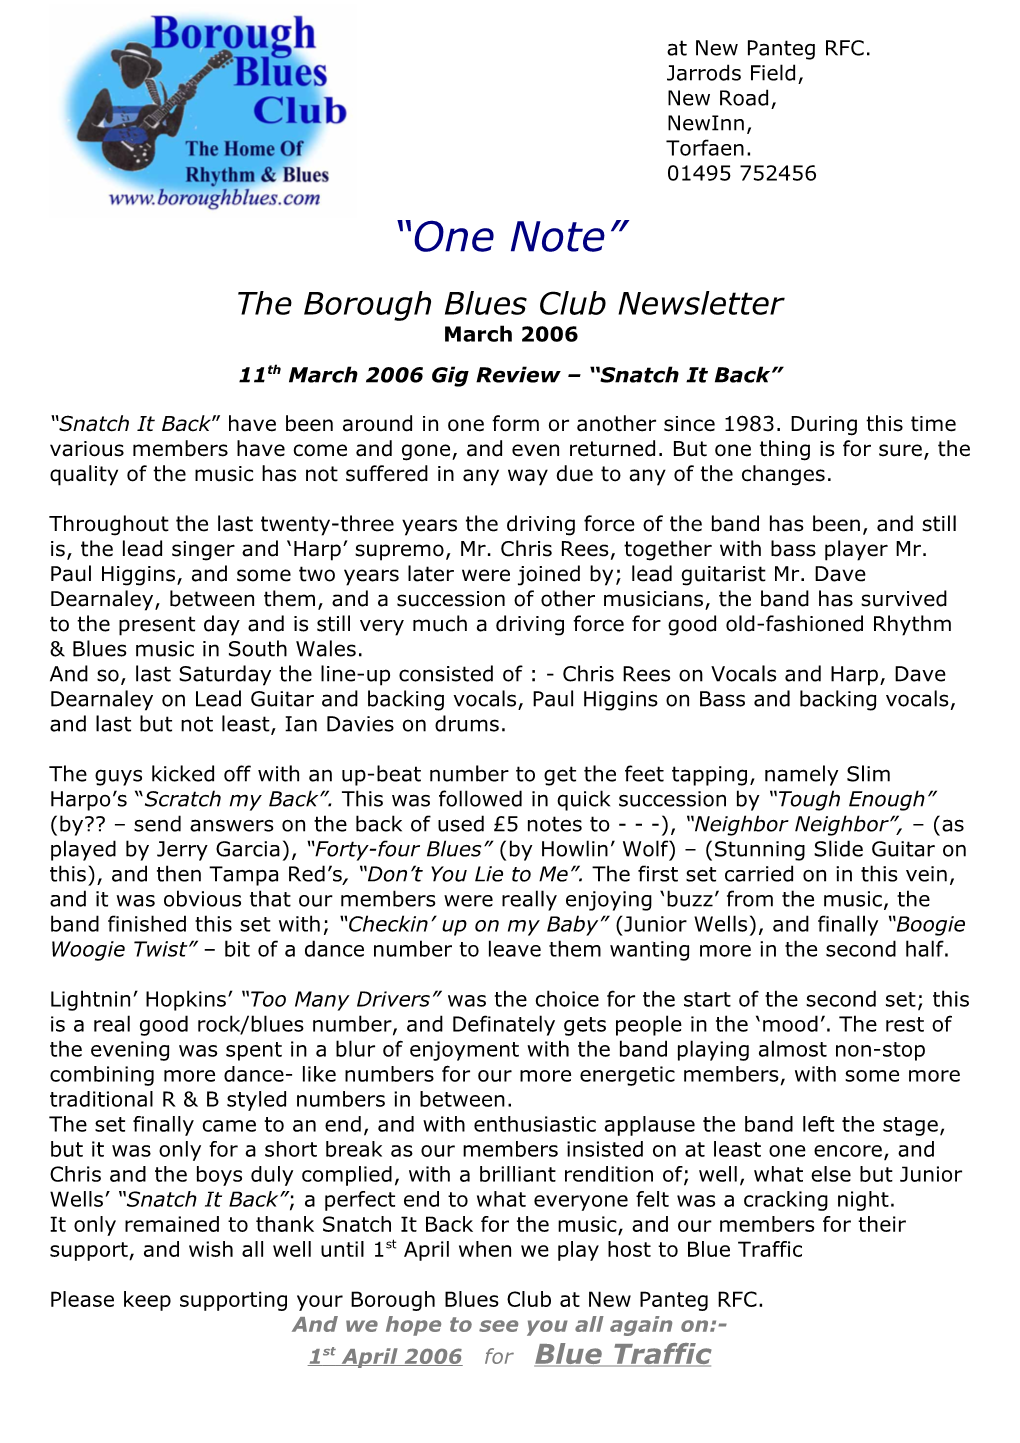 The Borough Blues Club Newsletter